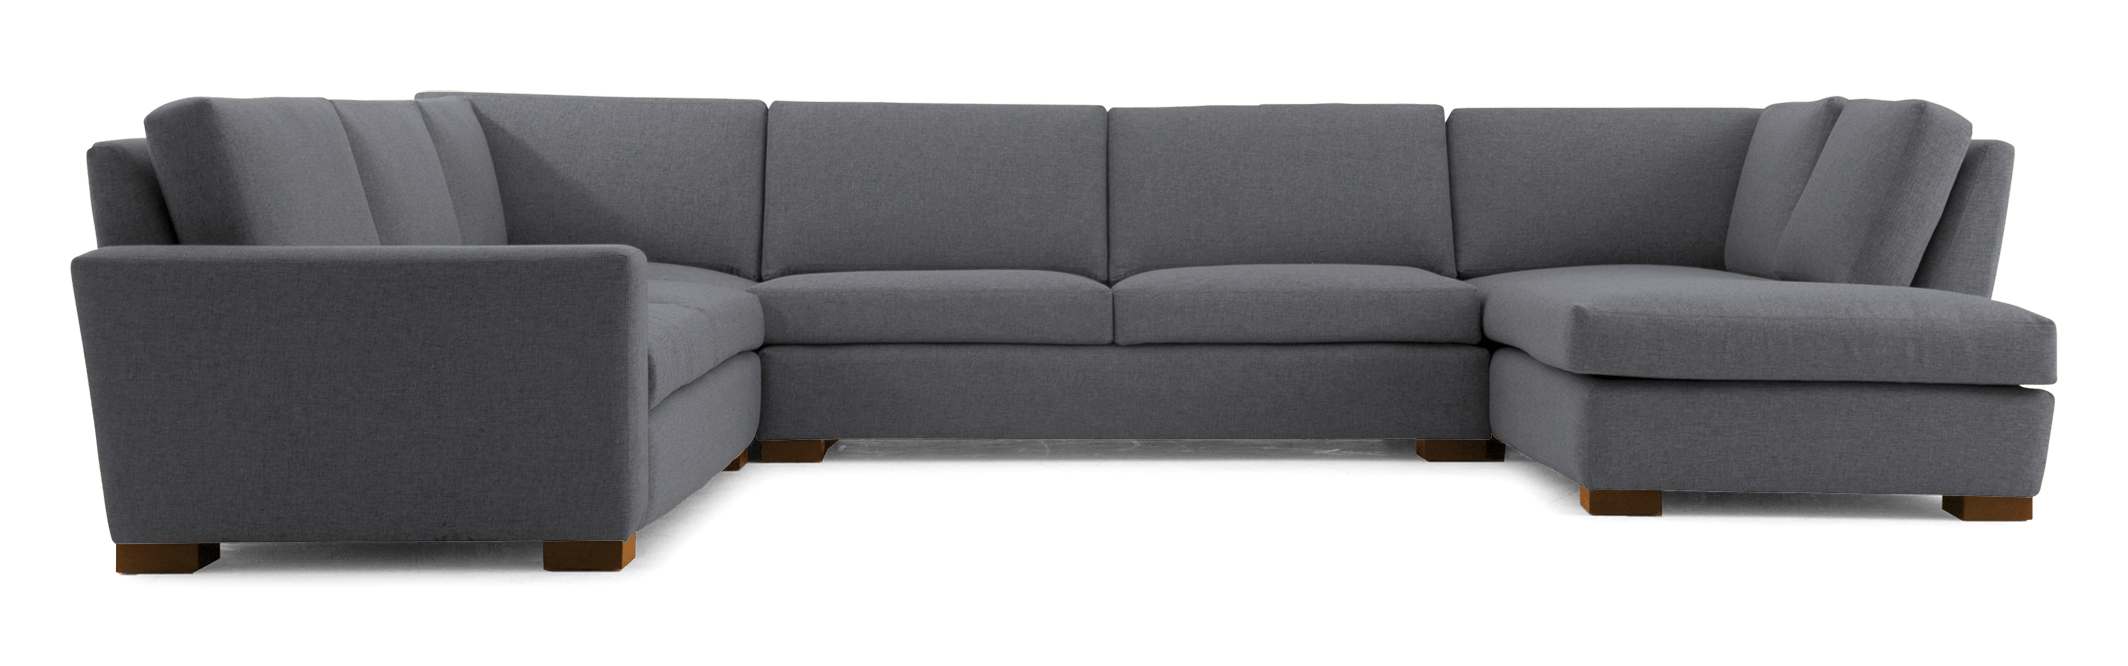 anton sofa bumper sectional %284 piece%29 essence ash